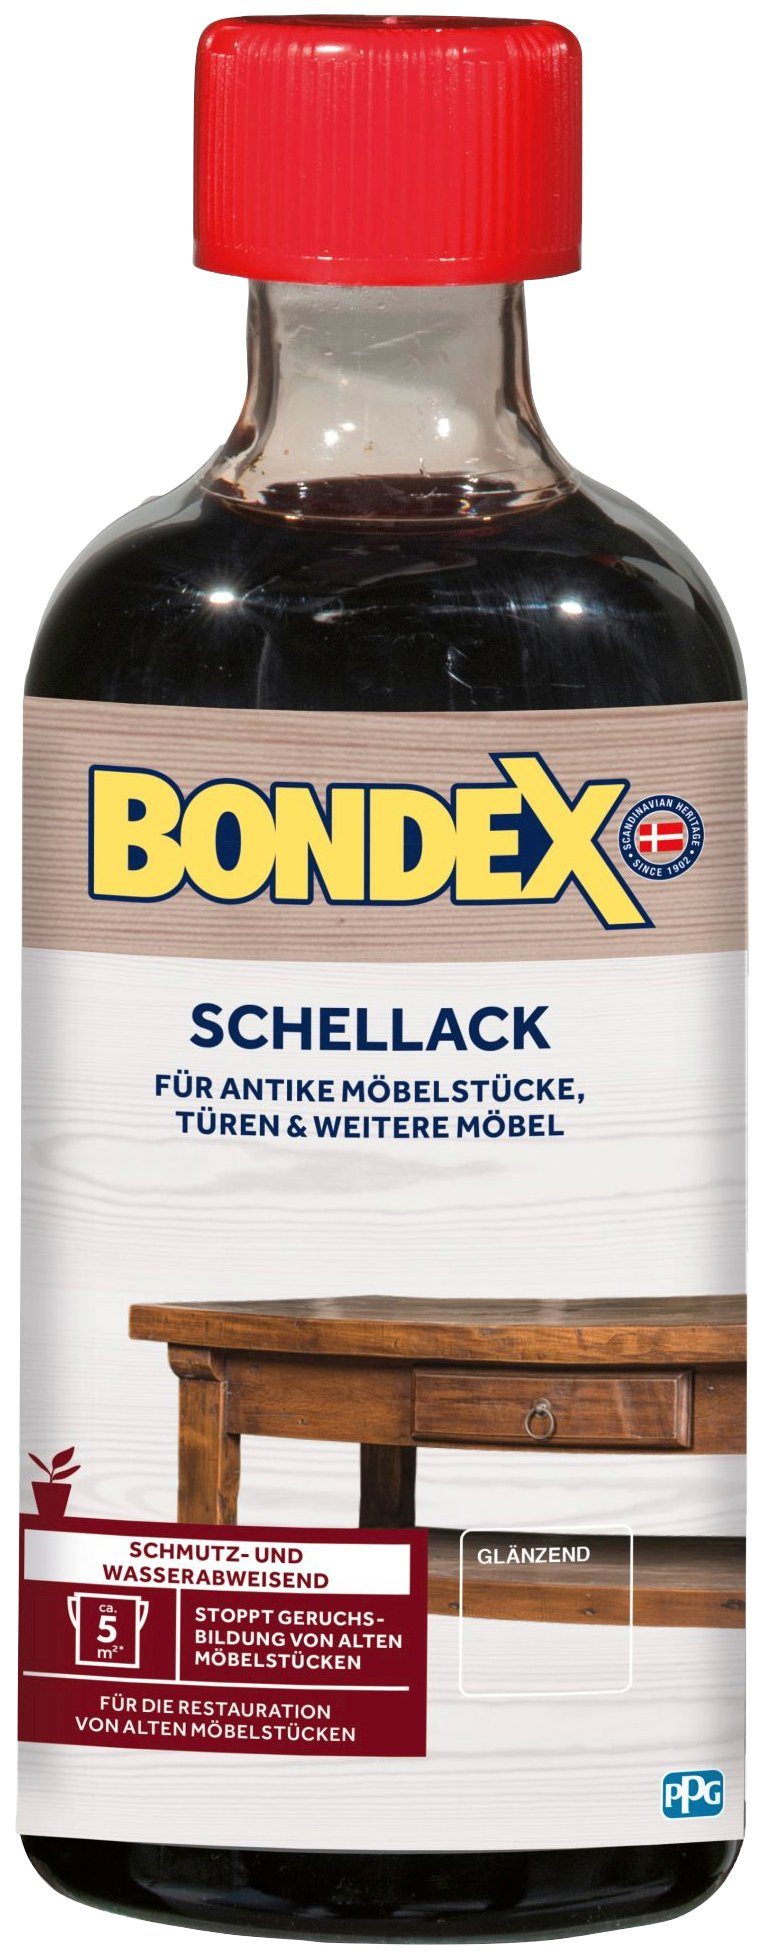 Bondex Holzlack SCHELLACK, Farblos /Glänzend, 0,25 Liter Inhalt | Holzlacke